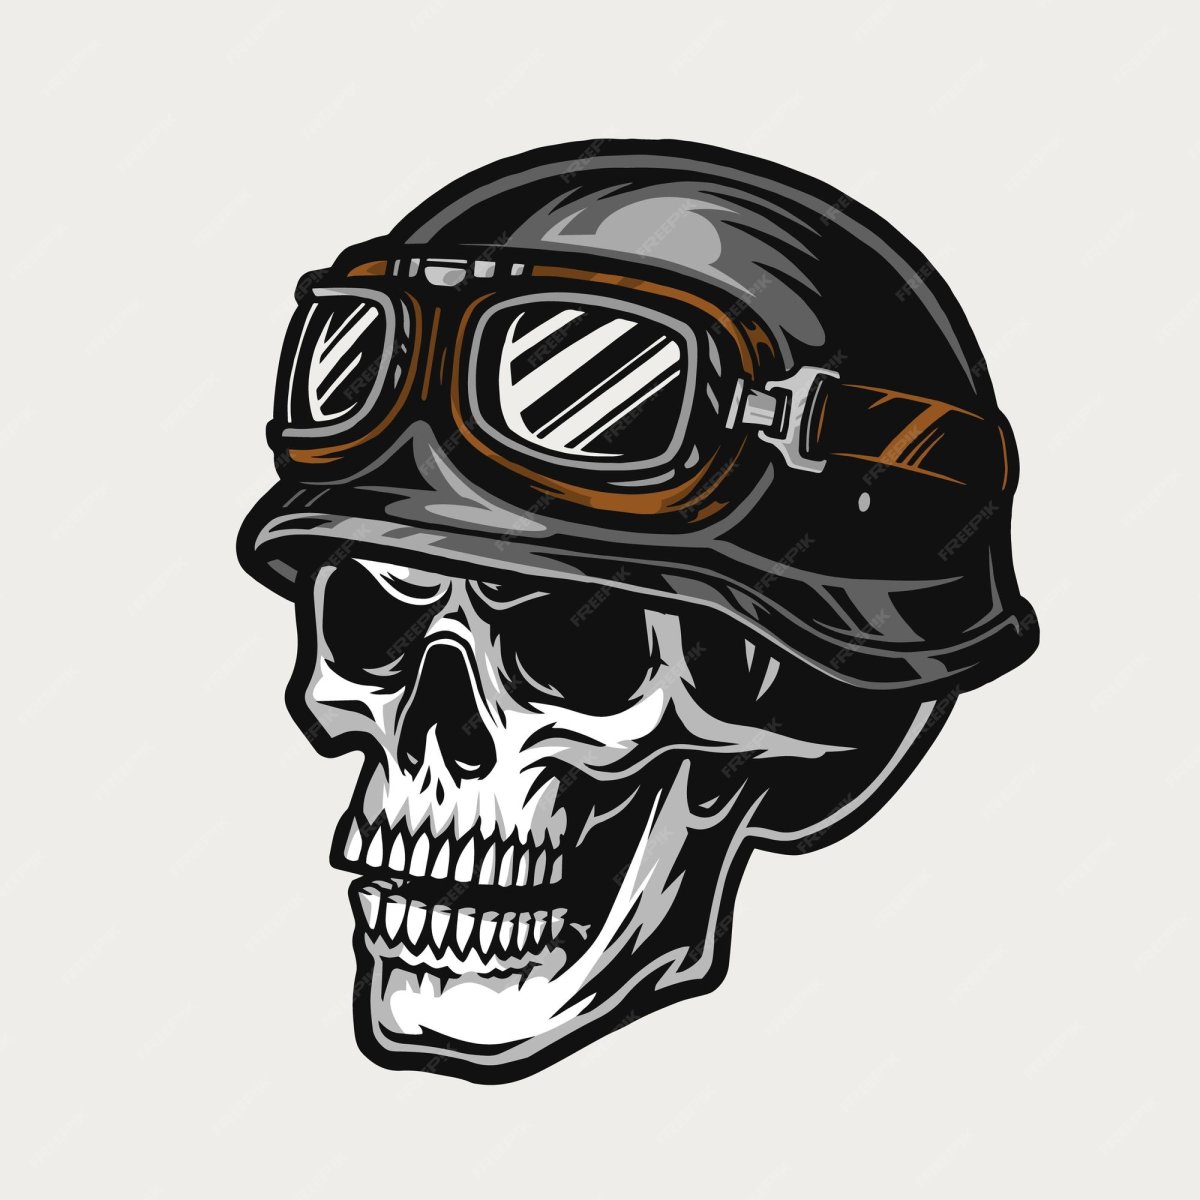 Skull in Motorcycle Helmet vector